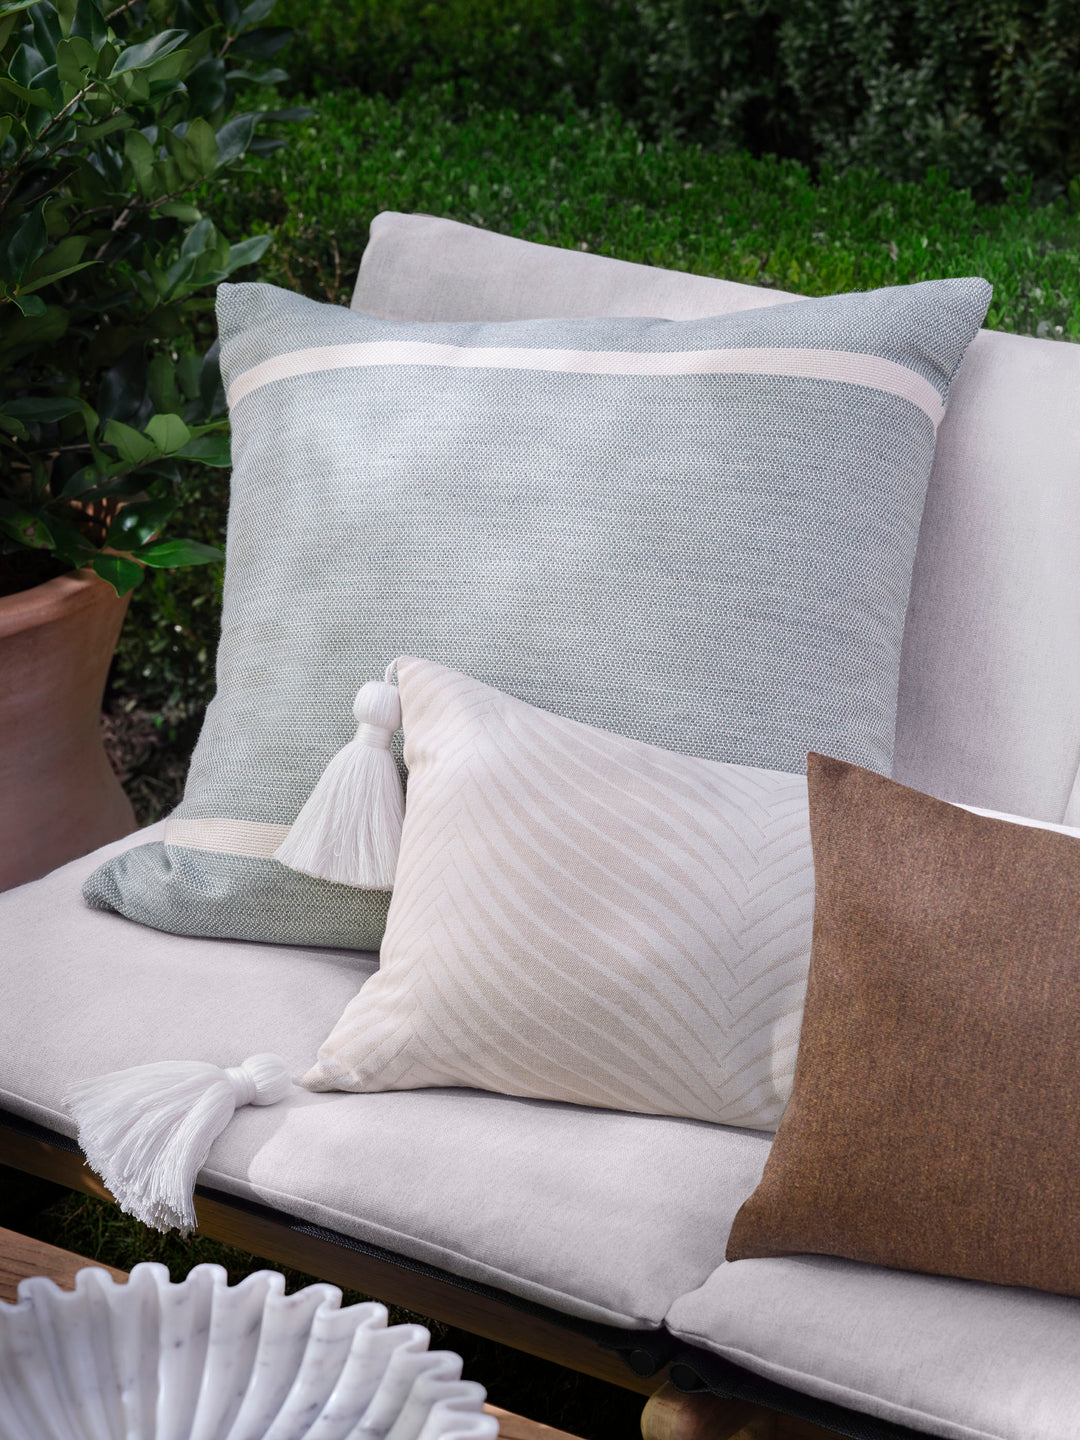 Custom Outdoor Cushions, Pillows & Furniture - RSH Decor